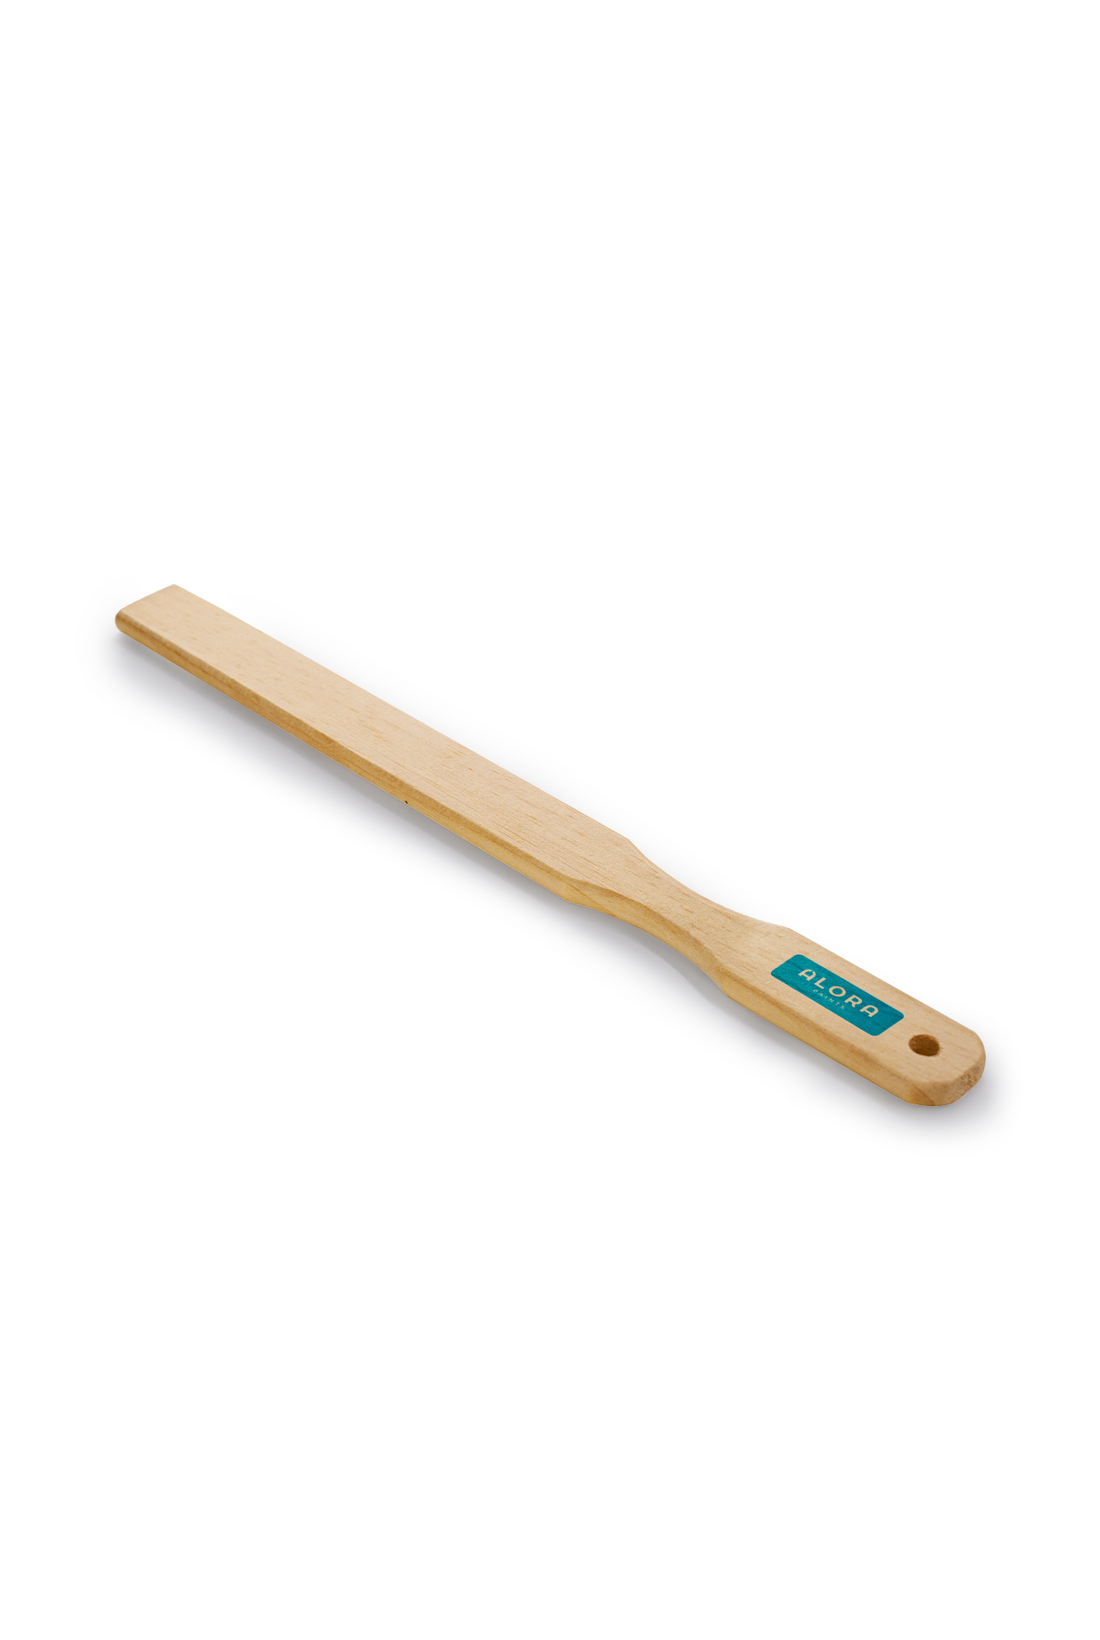 Wooden Paint Stir Stick